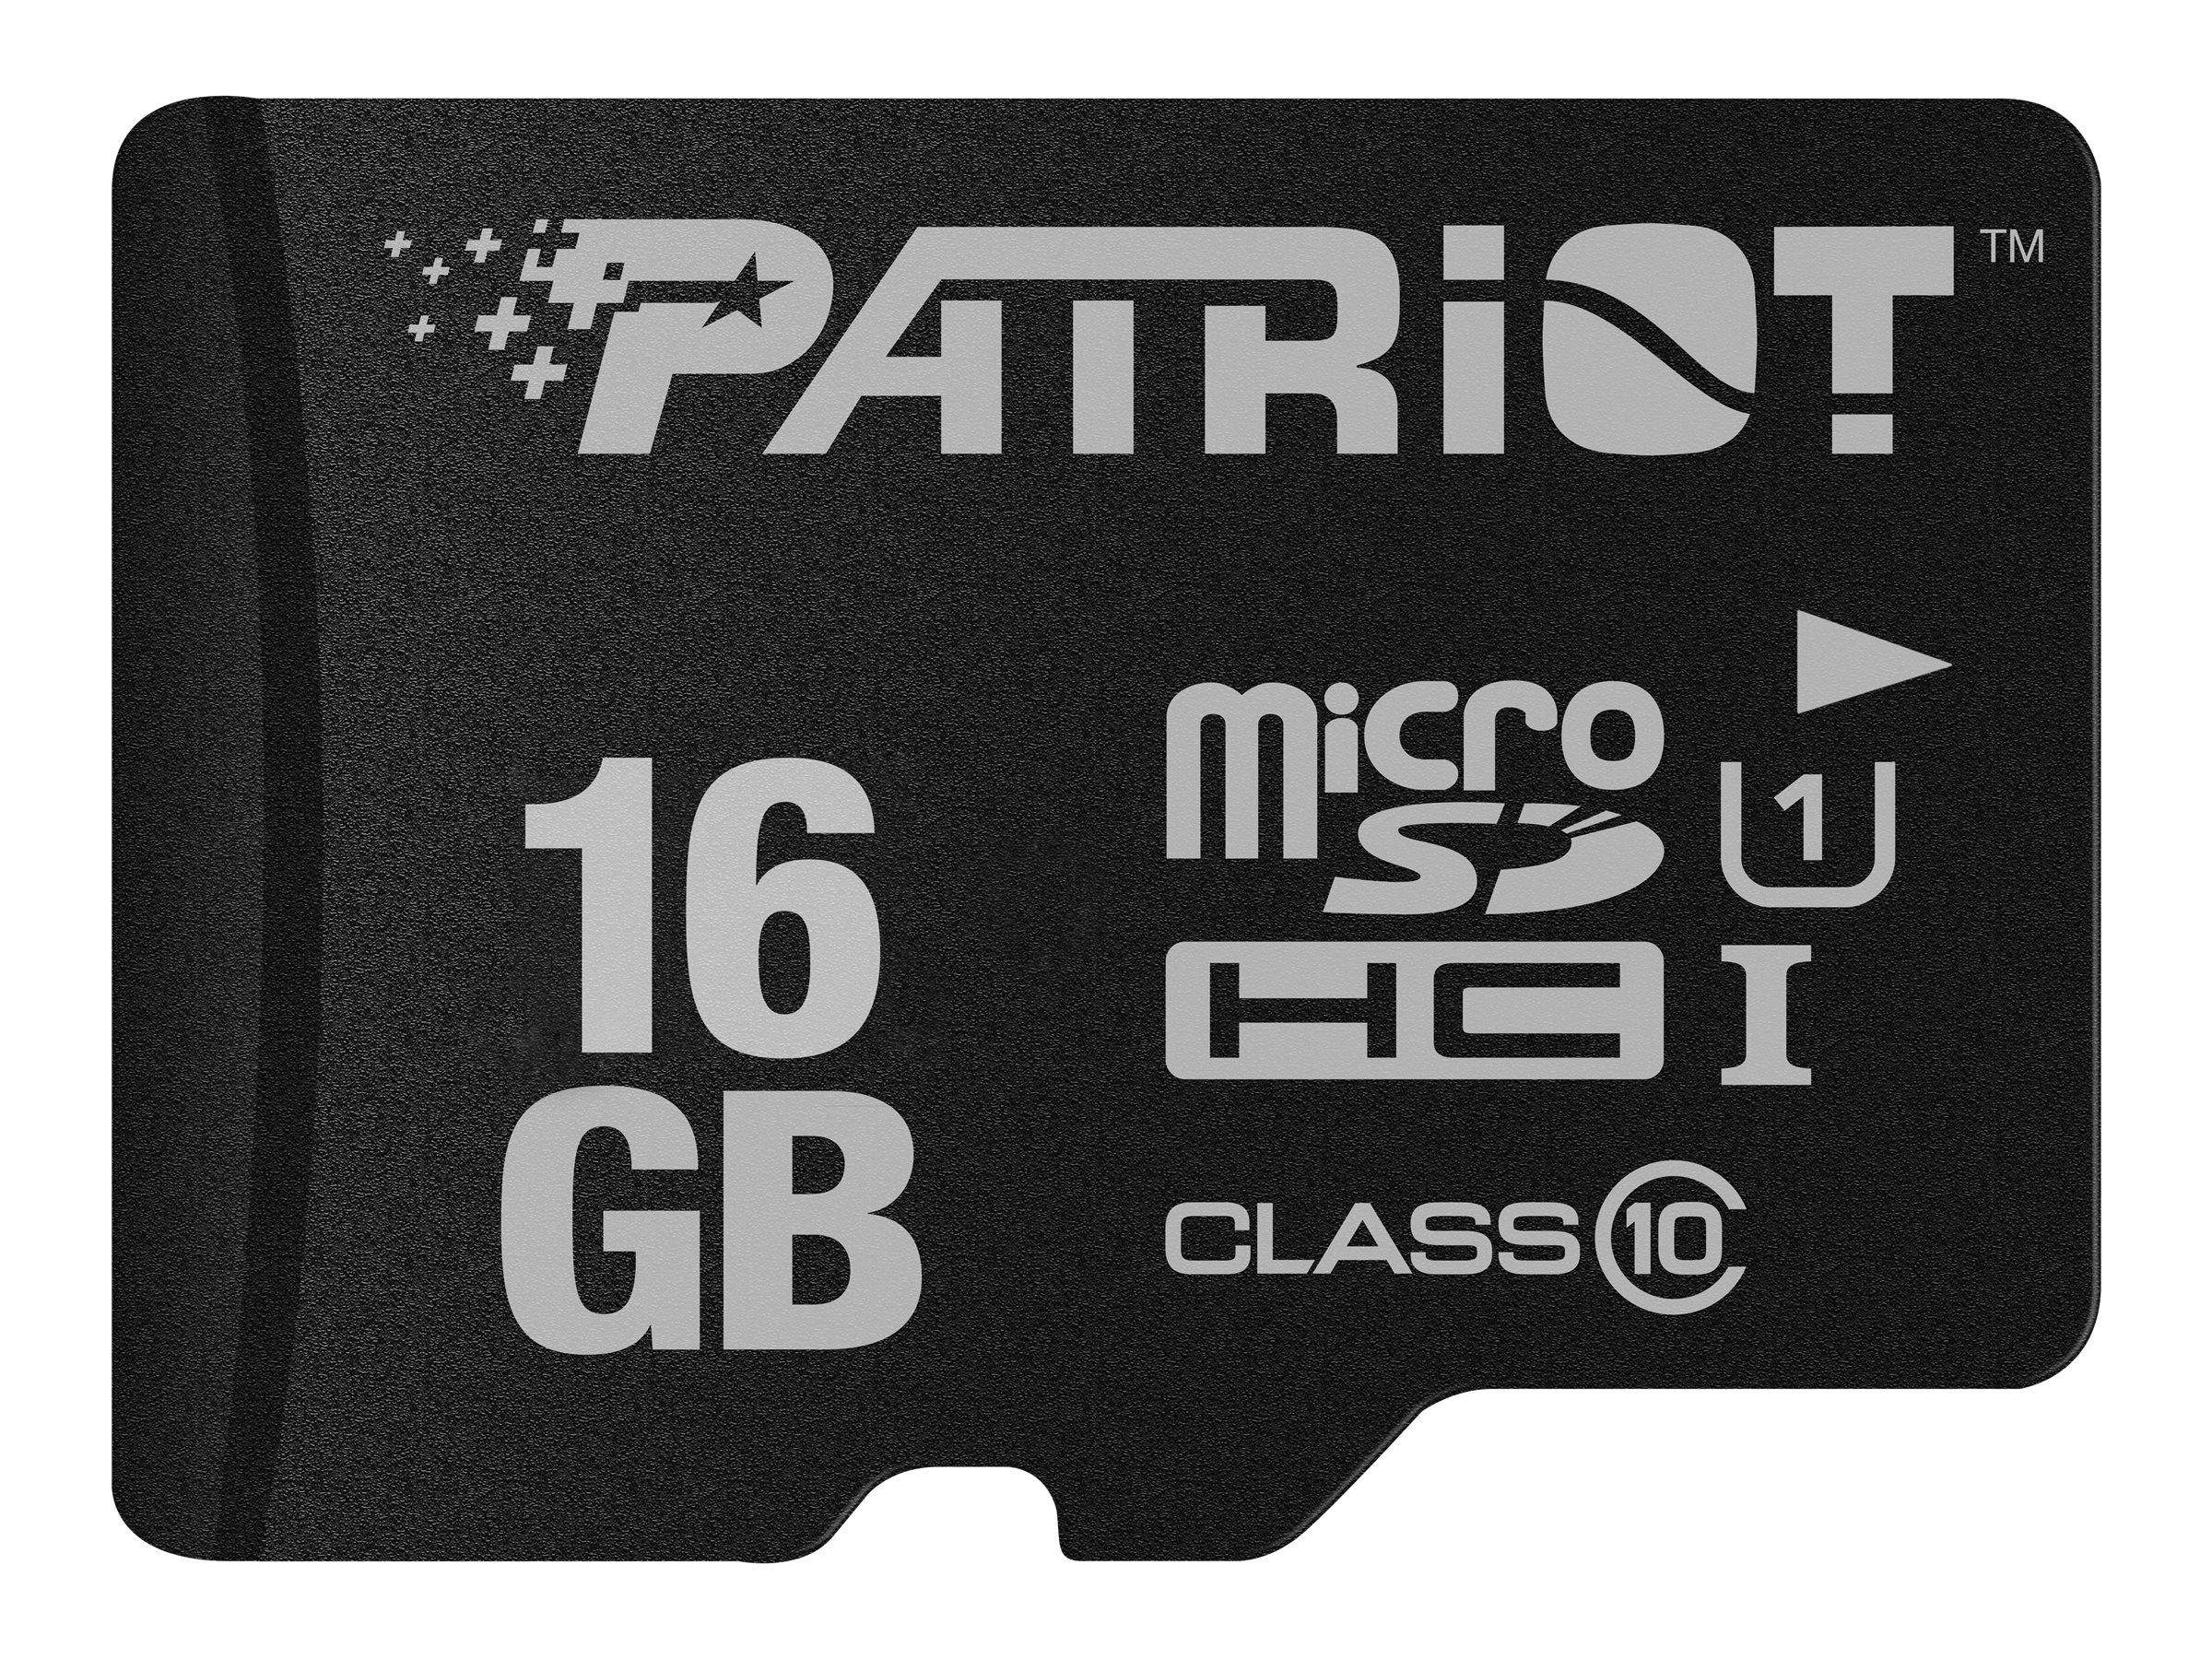 PATRIOT MicroSDHC Card LX Series 16GB UHS-I/Class 10